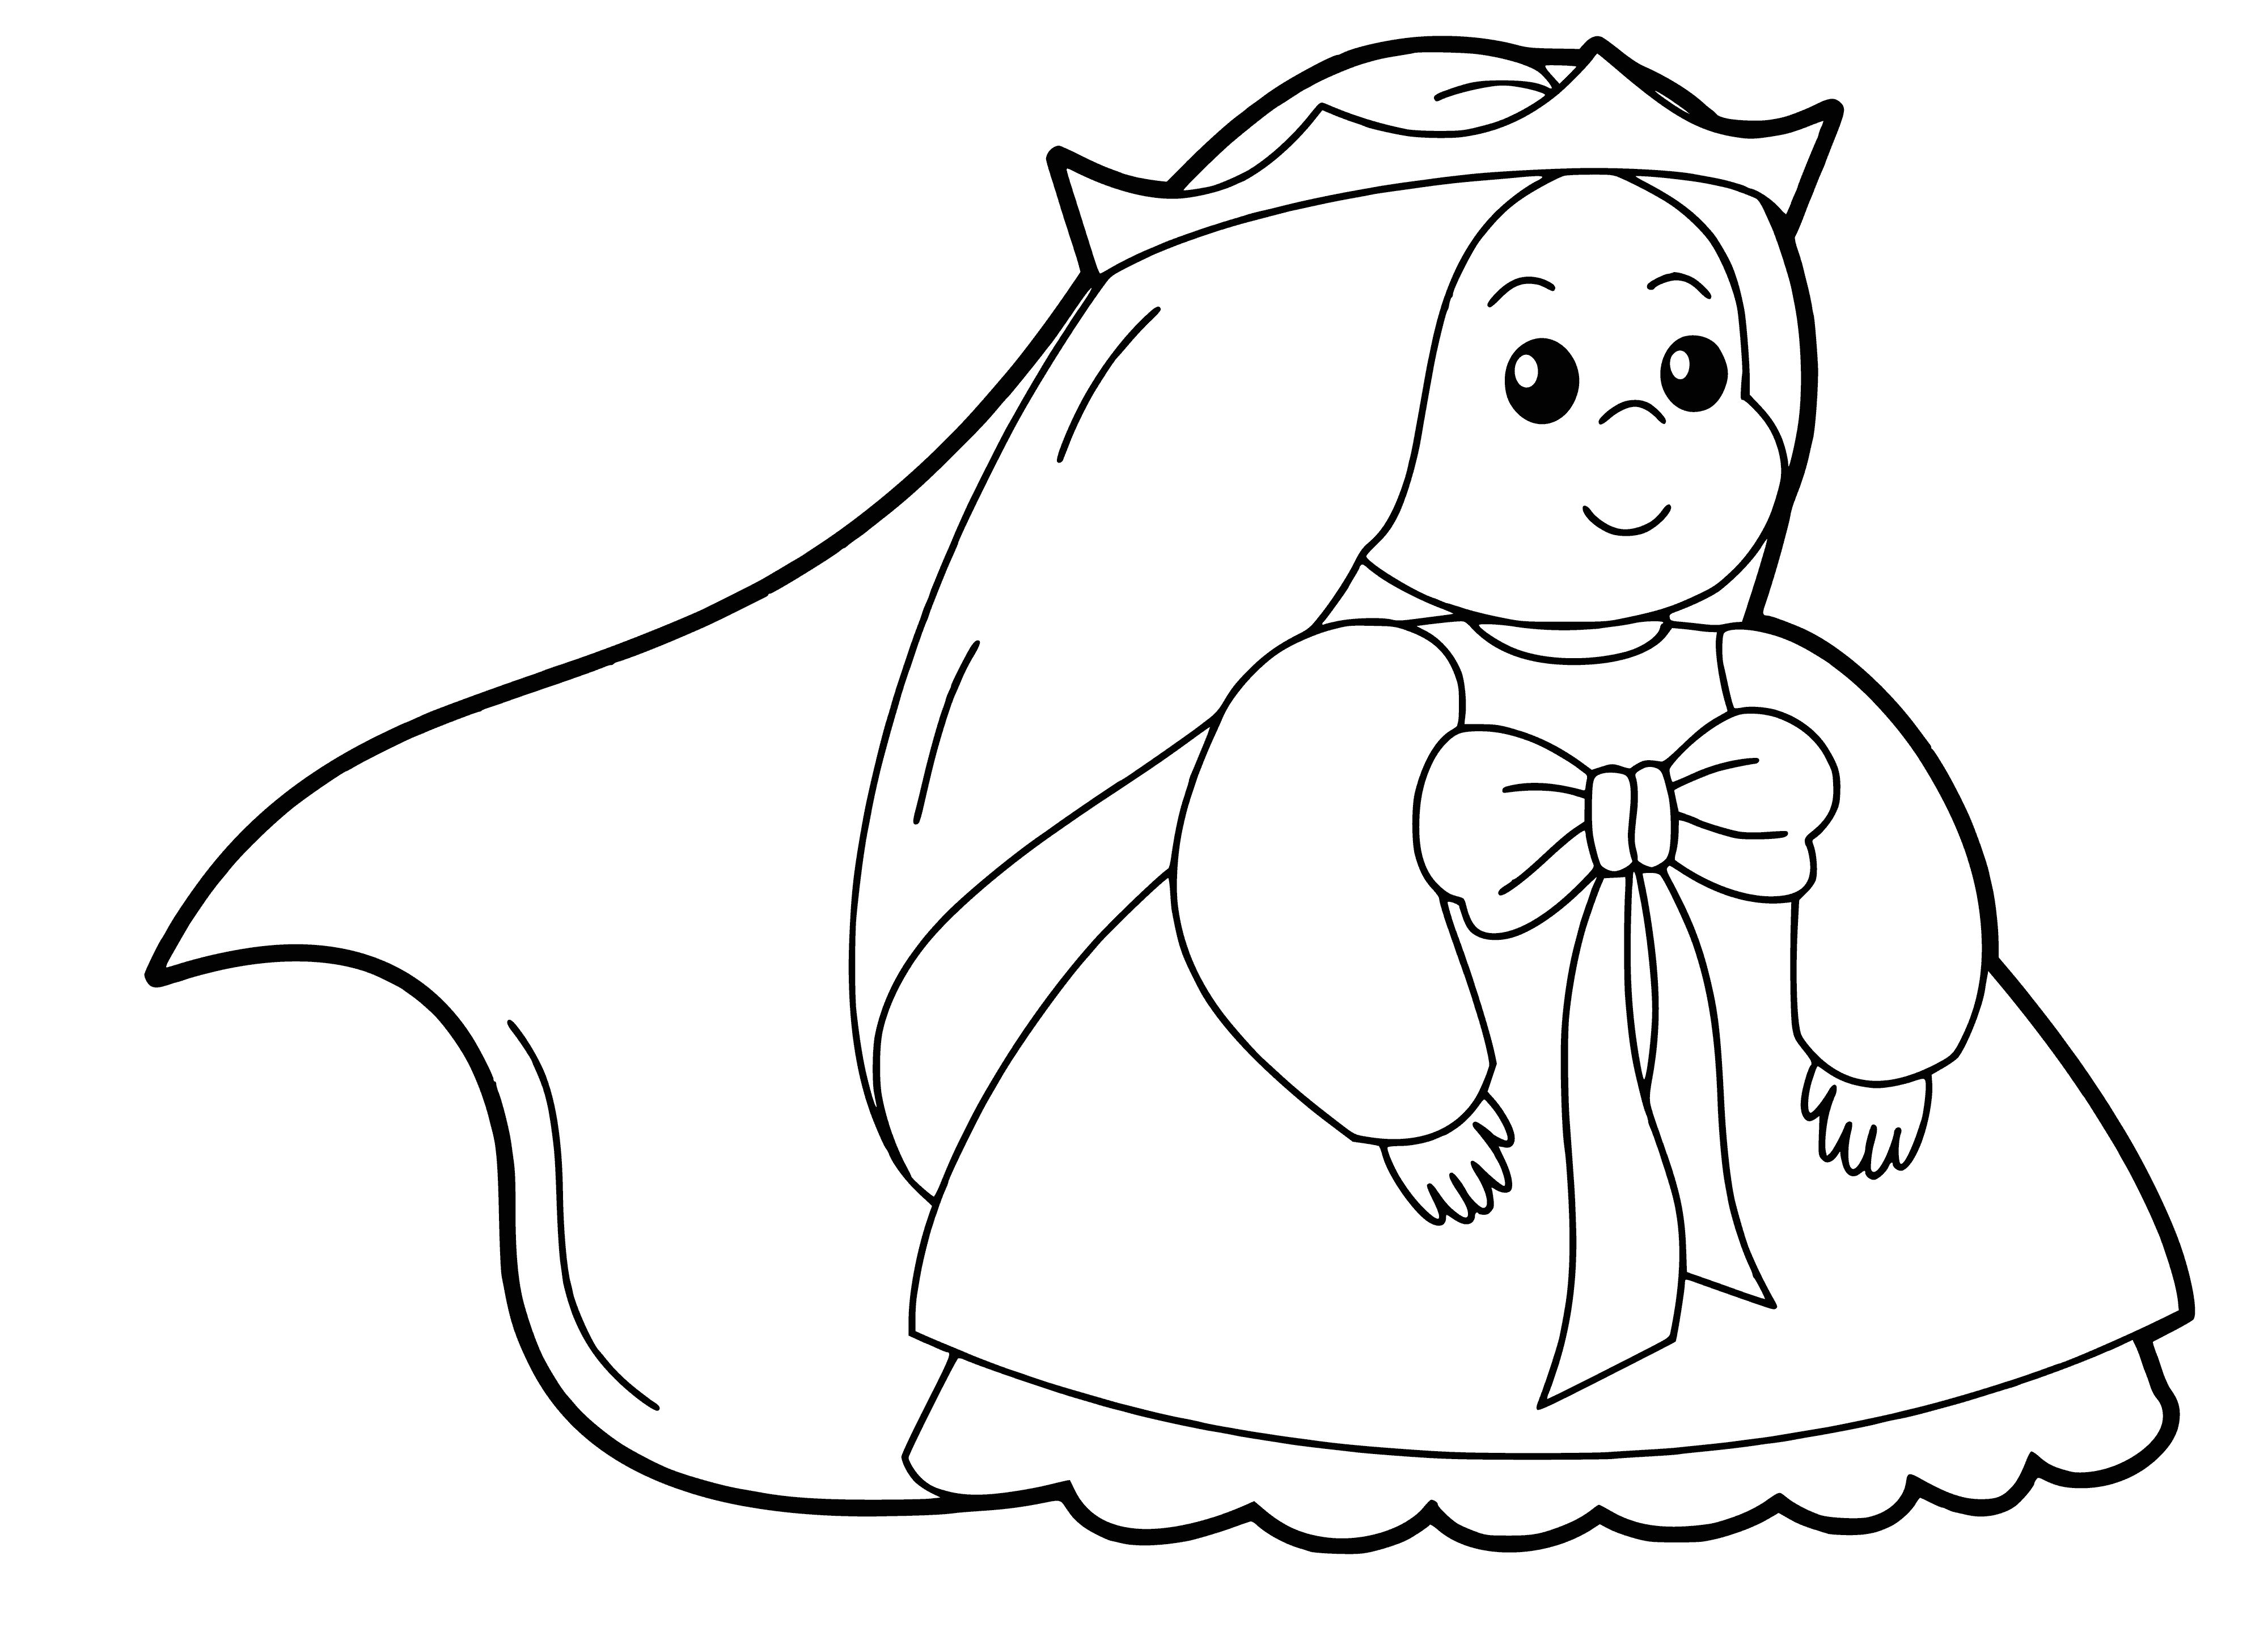 Little Princess coloring page